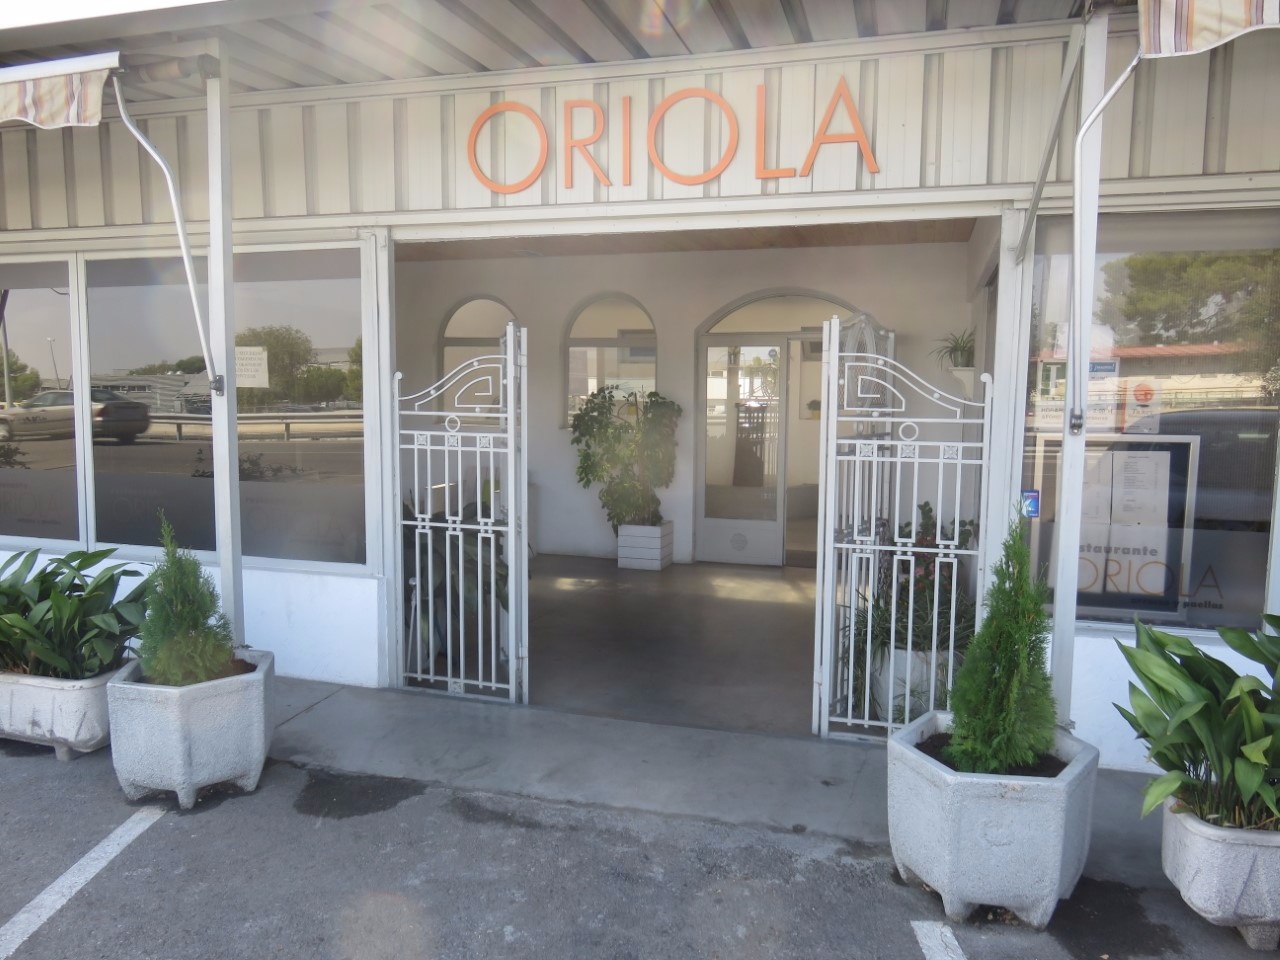 Images Restaurante Oriola